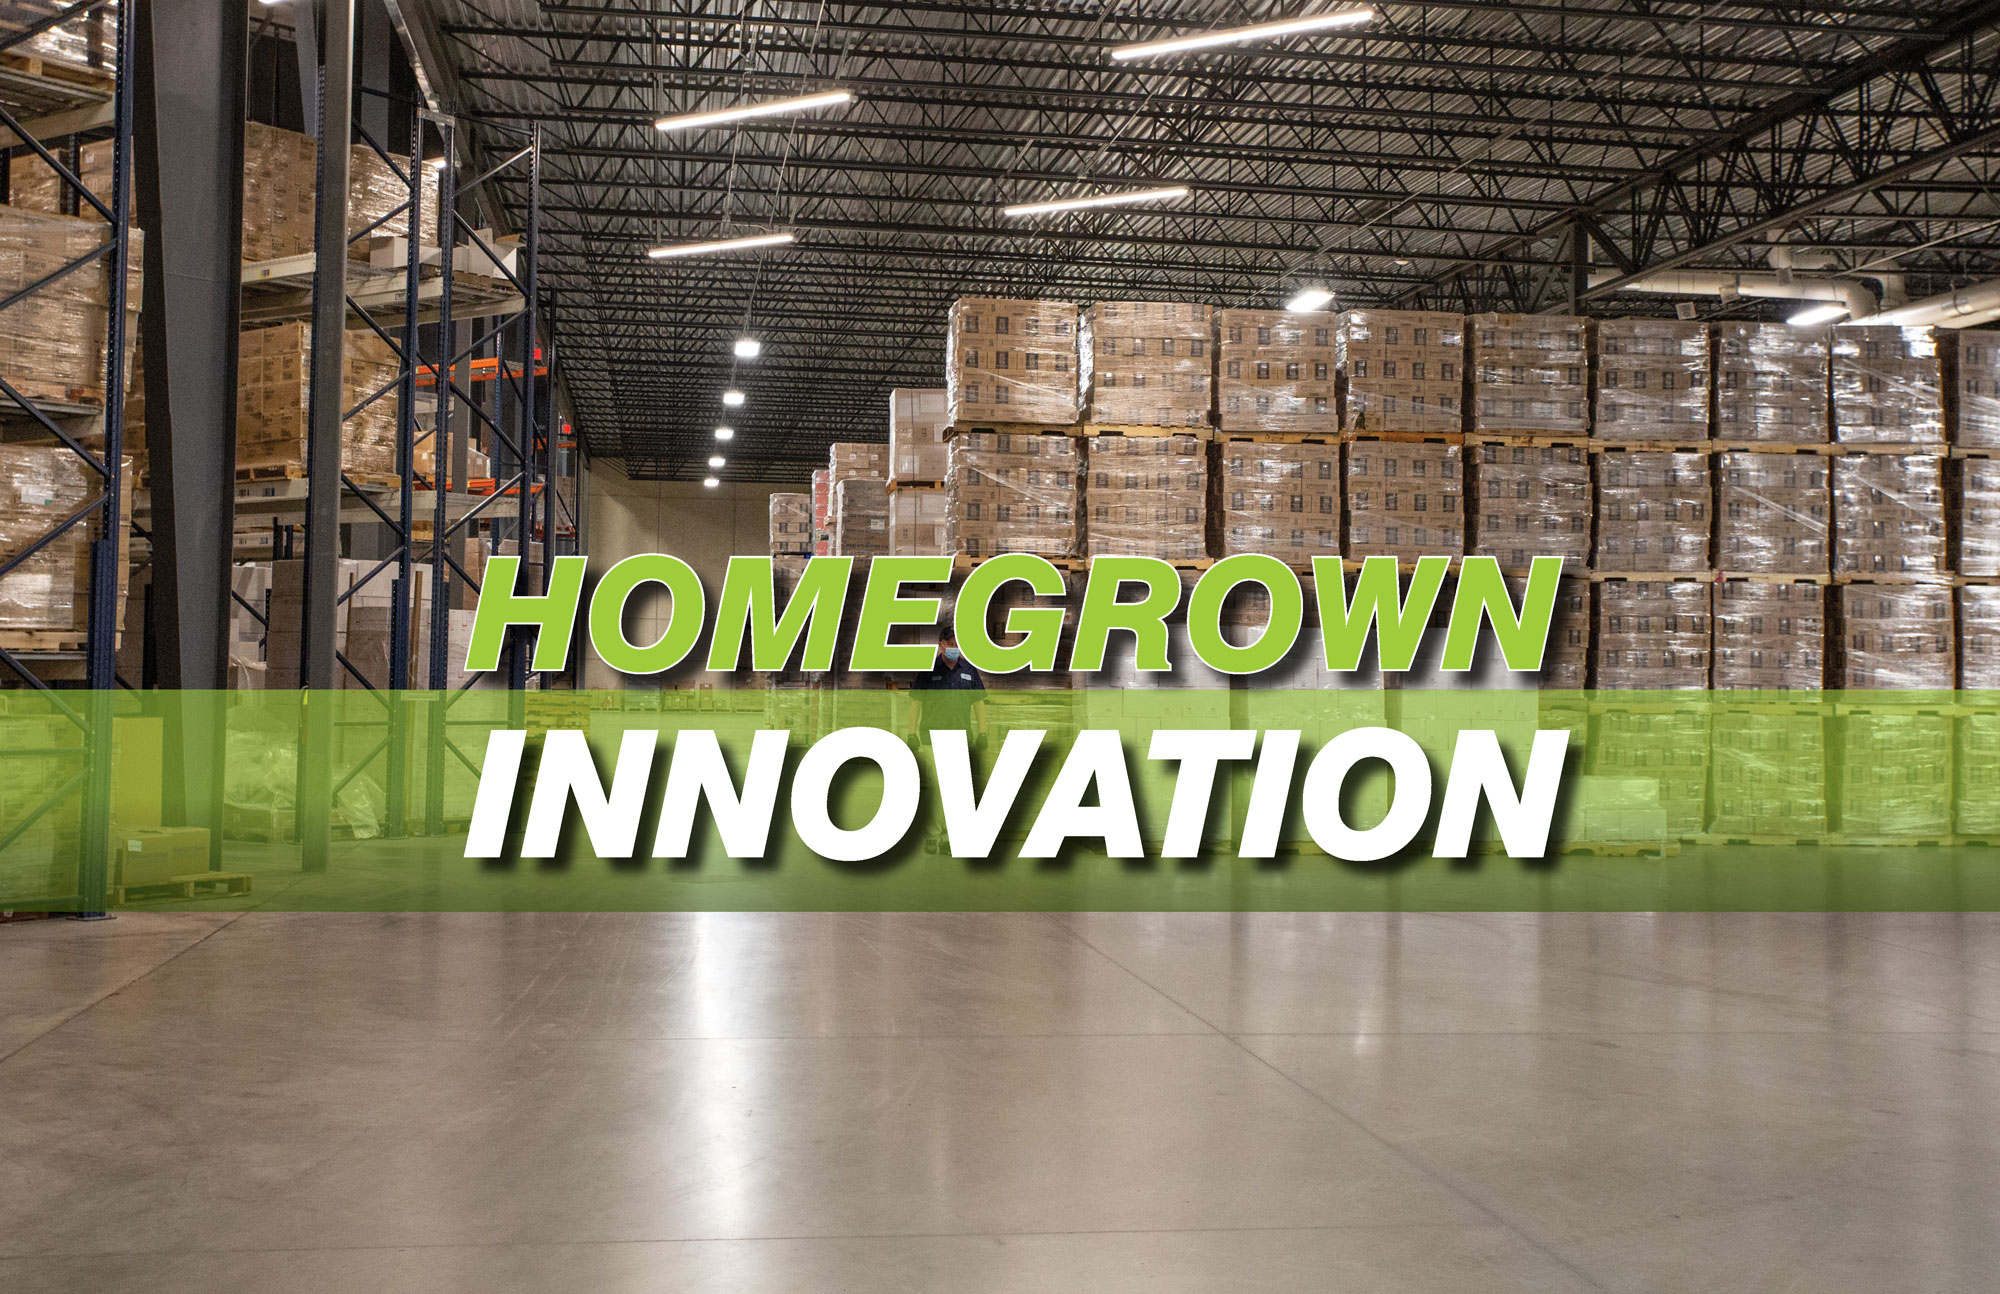  Homegrown Innovation